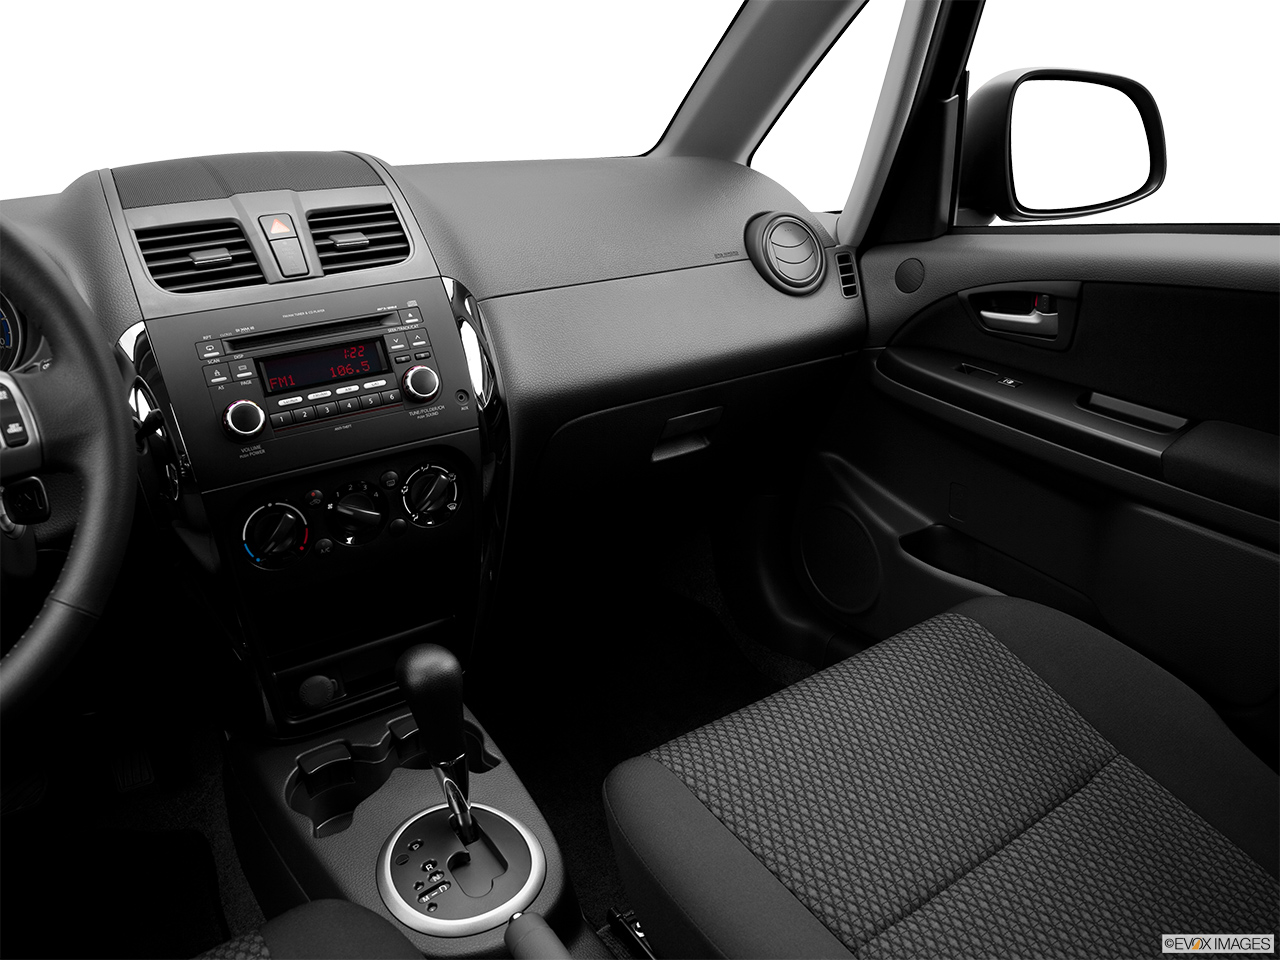 2013 Suzuki SX4 AWD Crossover Premium AT AWD Center Console/Passenger Side. 